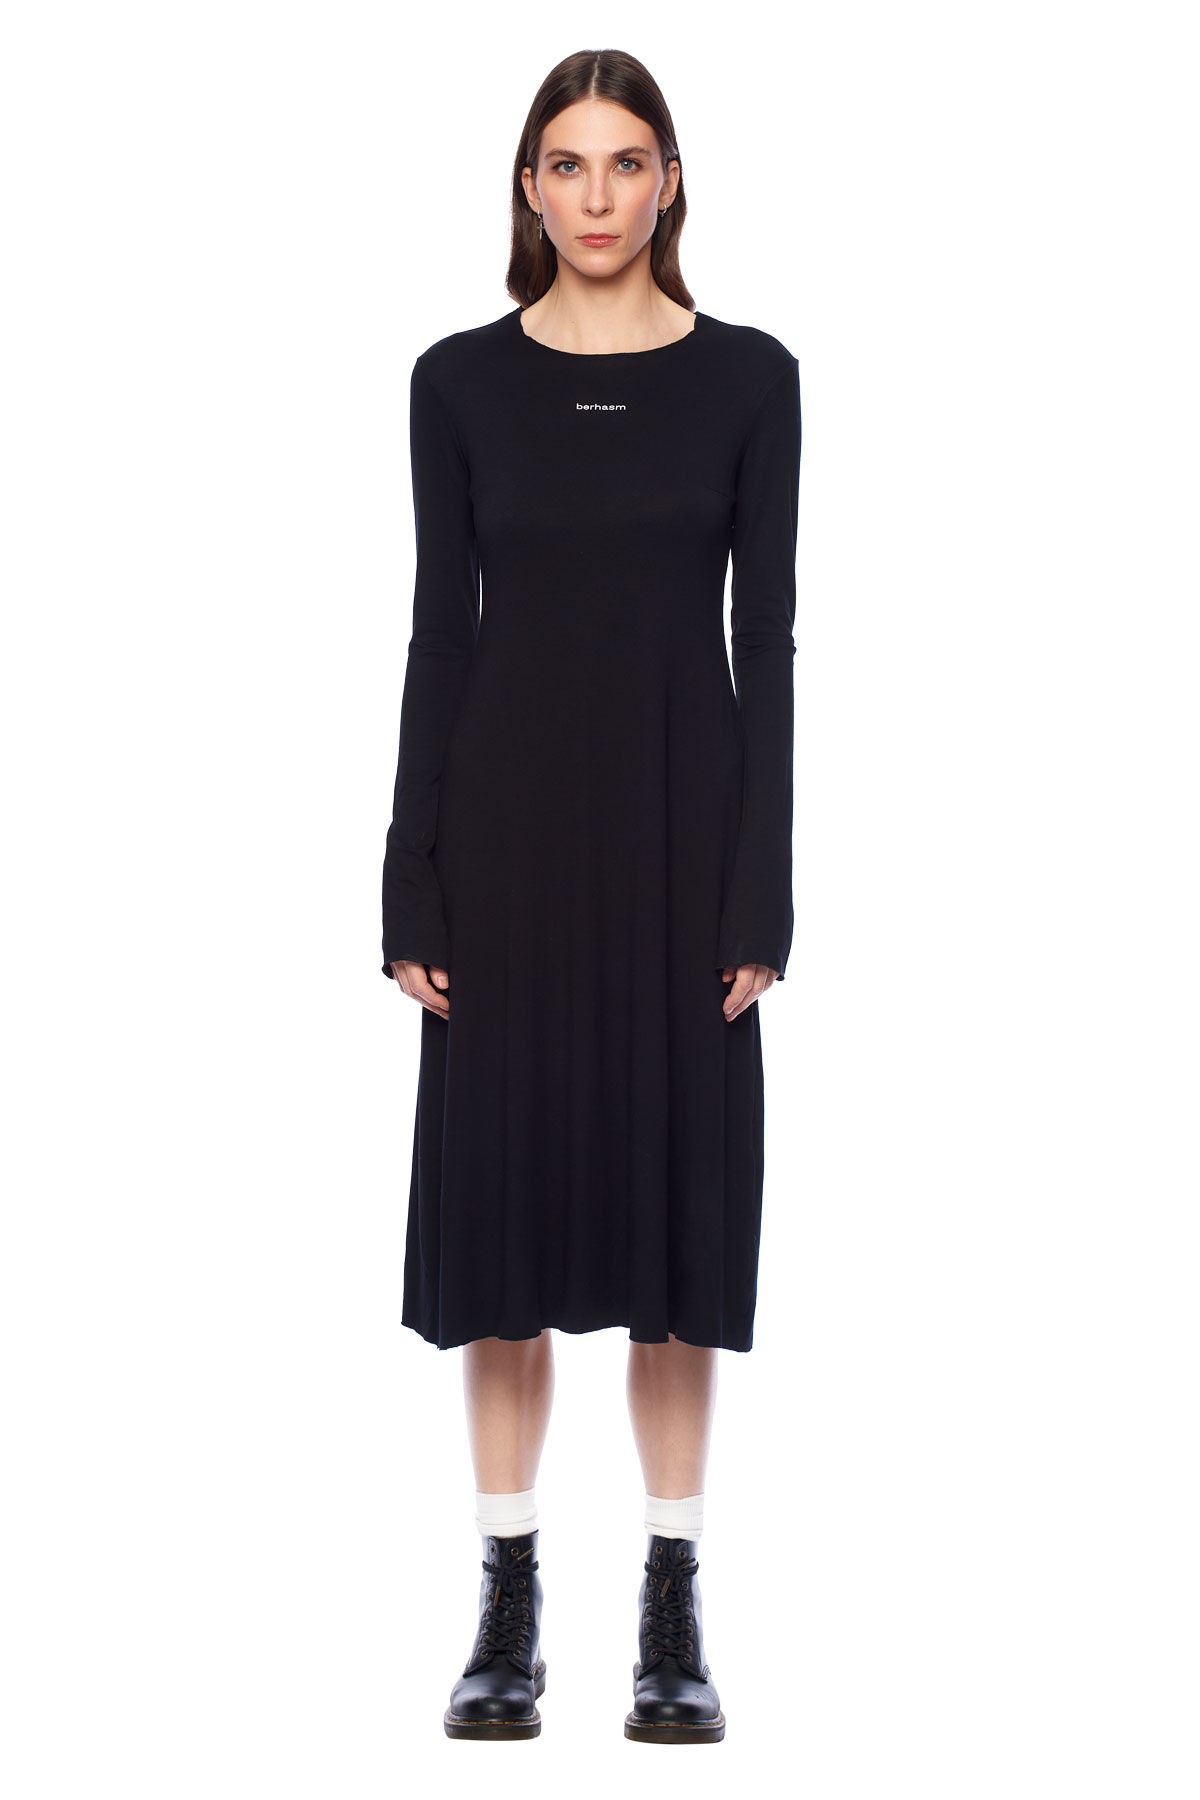 Black dress (petite robe noire)